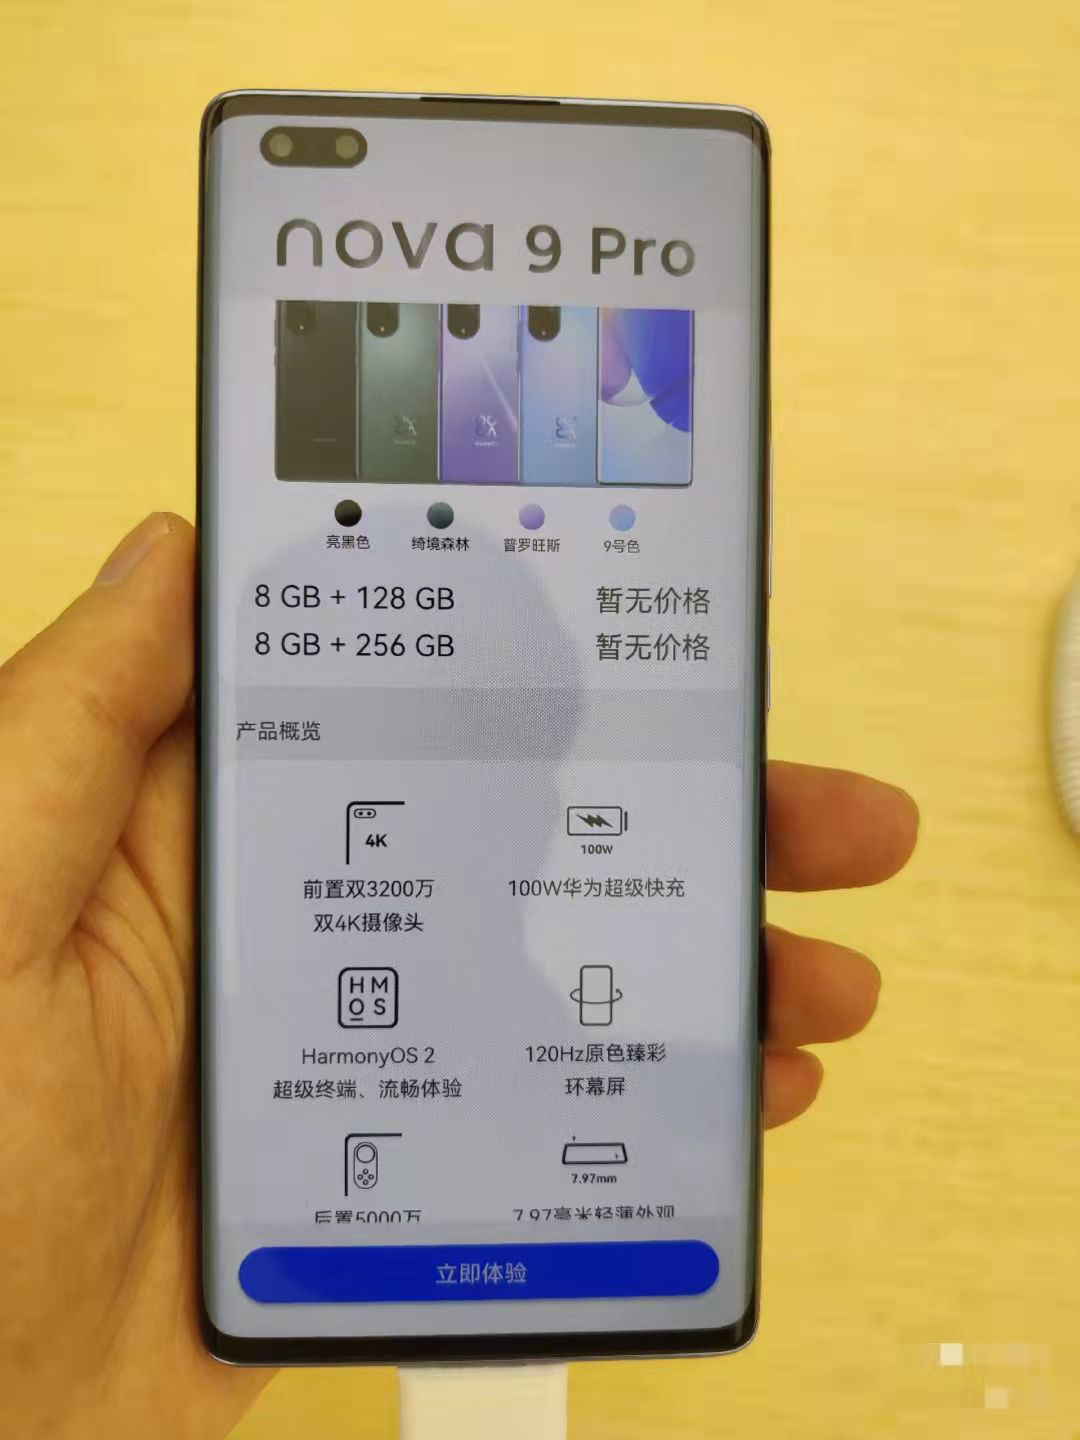  Huawei Nova 9 и Nova 9 Pro: фото и видео Huawei  - huawei_nova_9_i_nova_9_pro_na_zhivyh_foto_i_video_harakteristiki_2